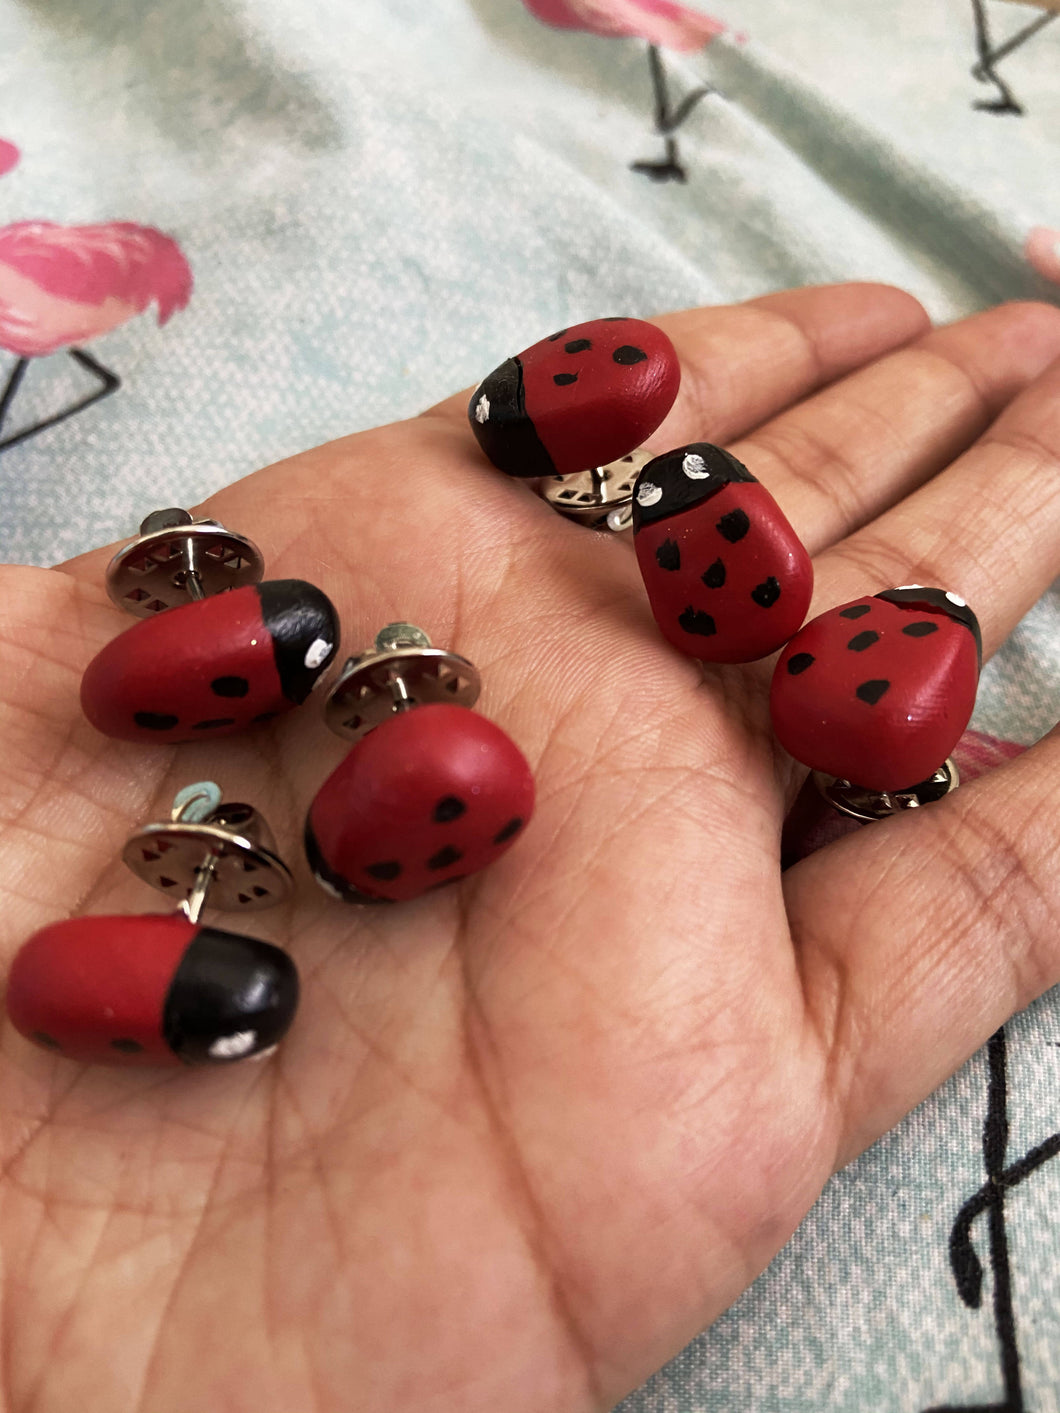 Ladybug pins